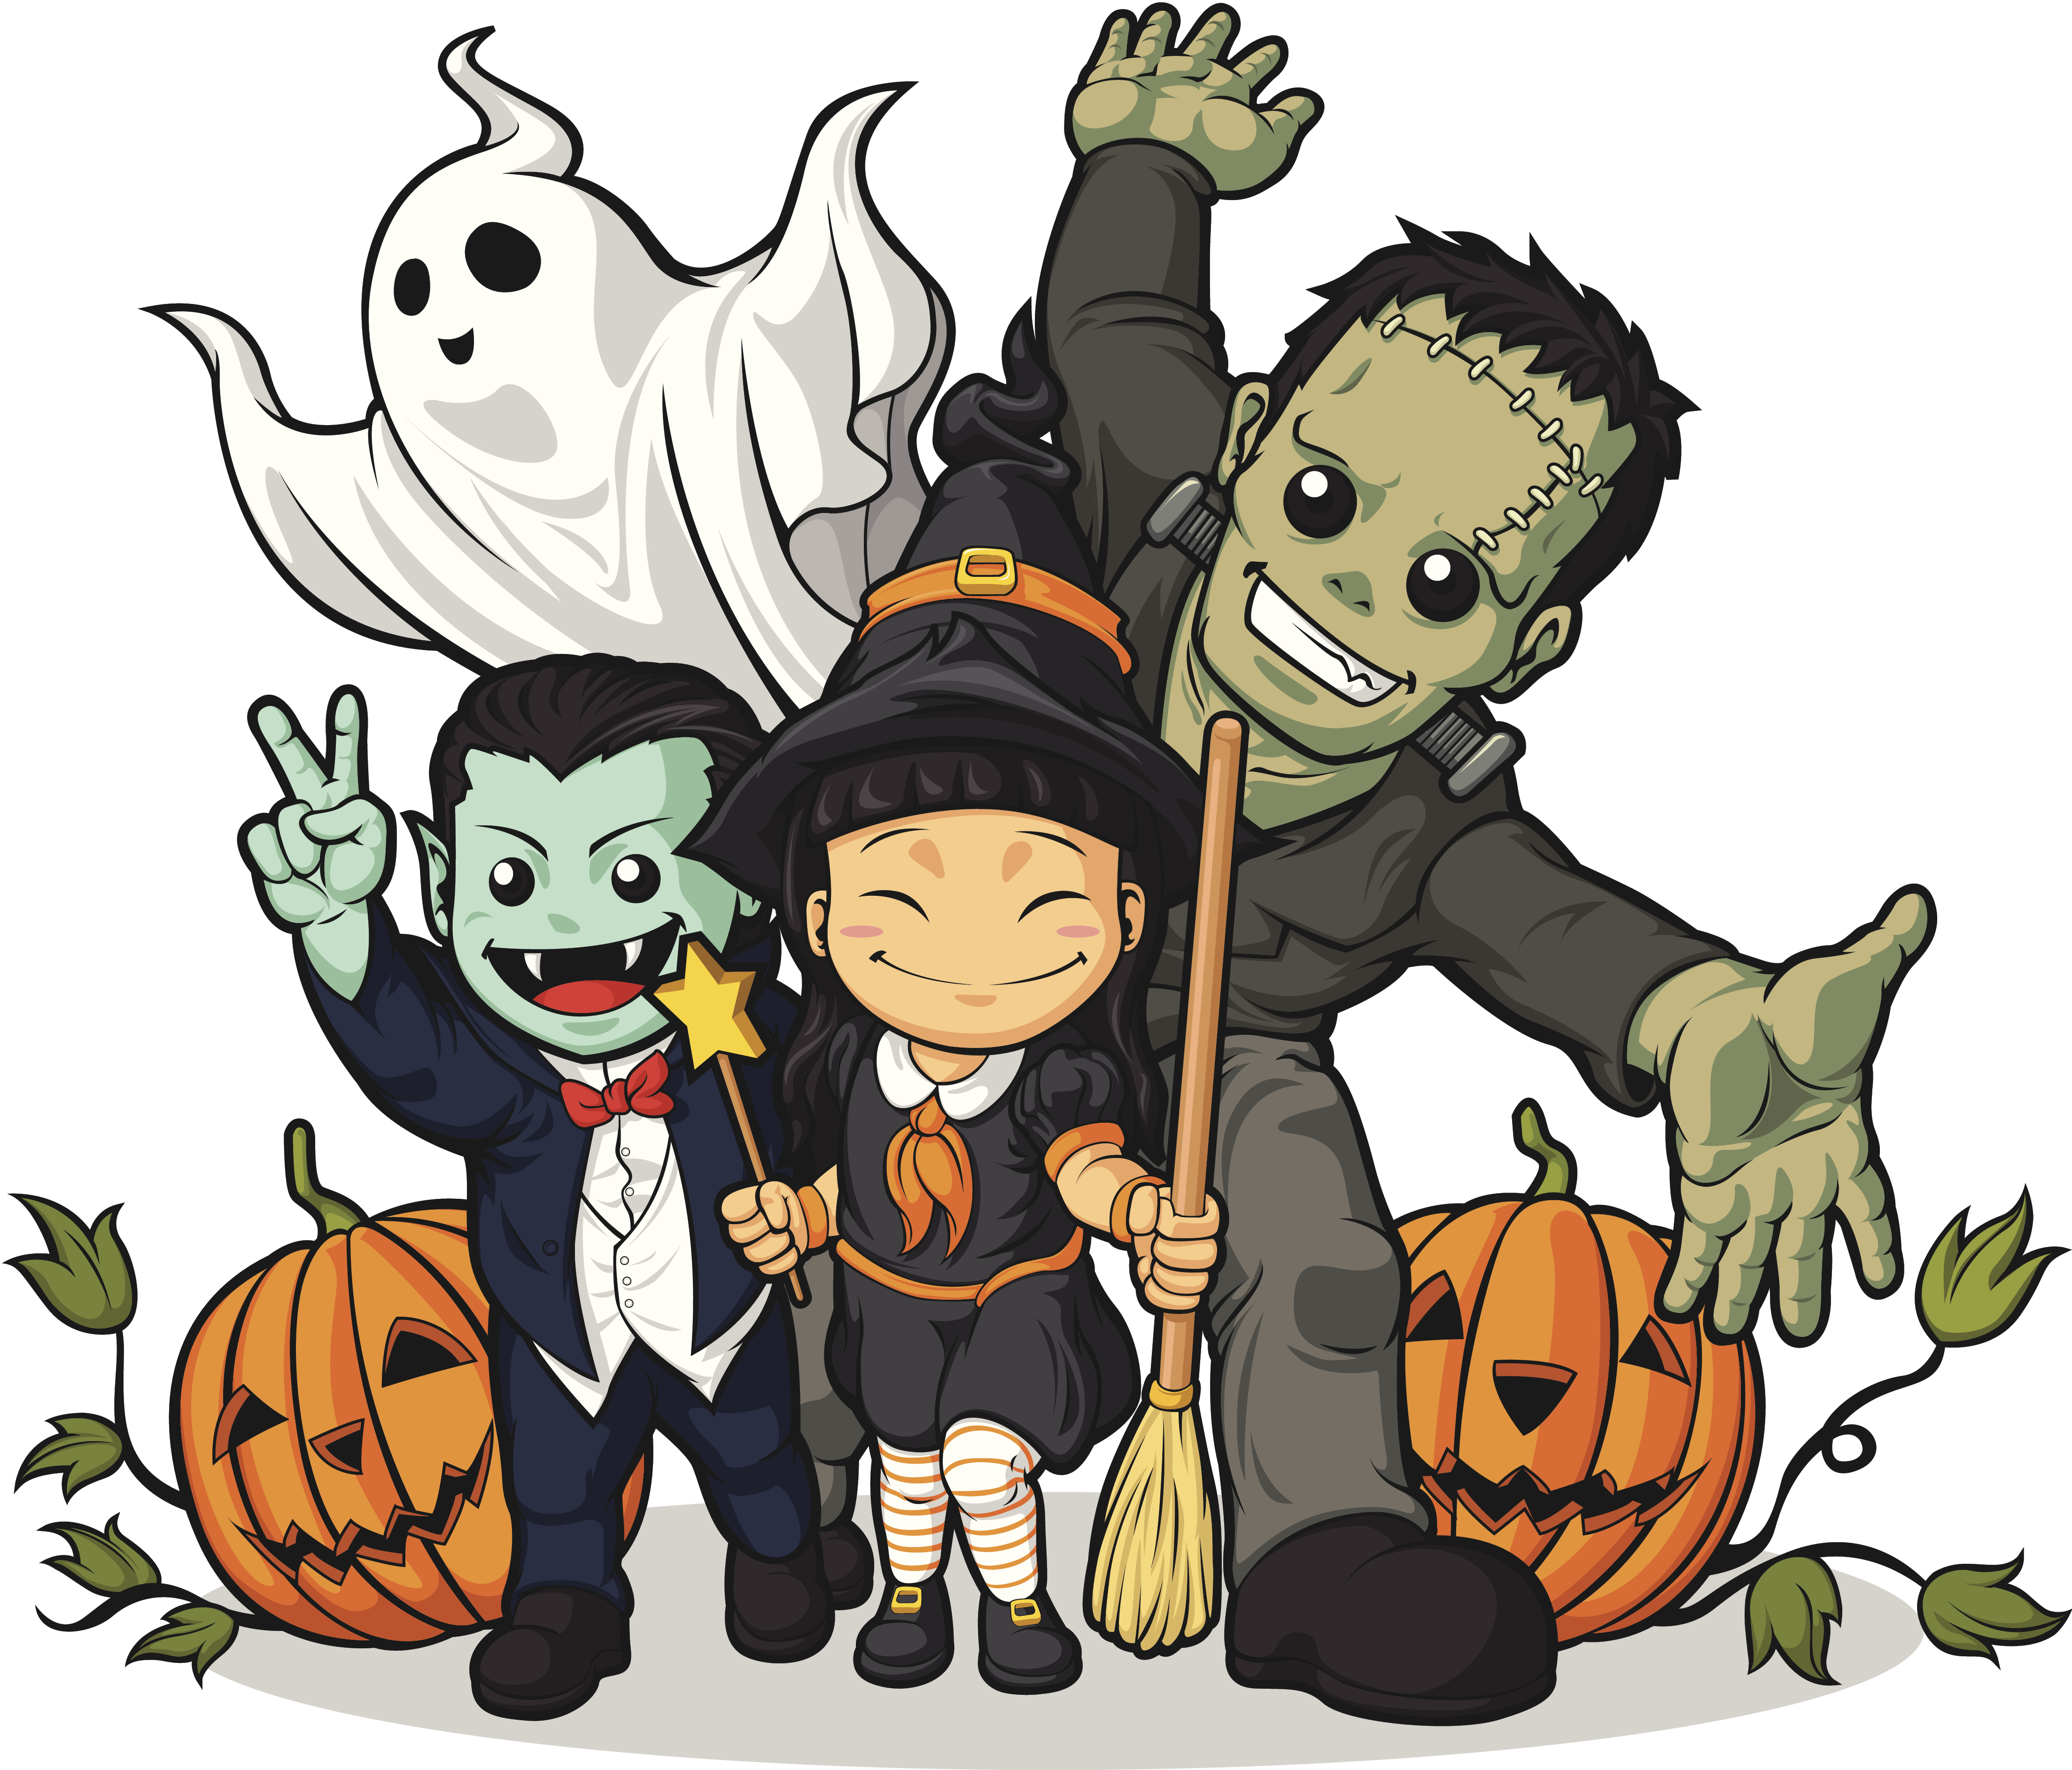 Halloween cartoon characters and jack-o-lanterns